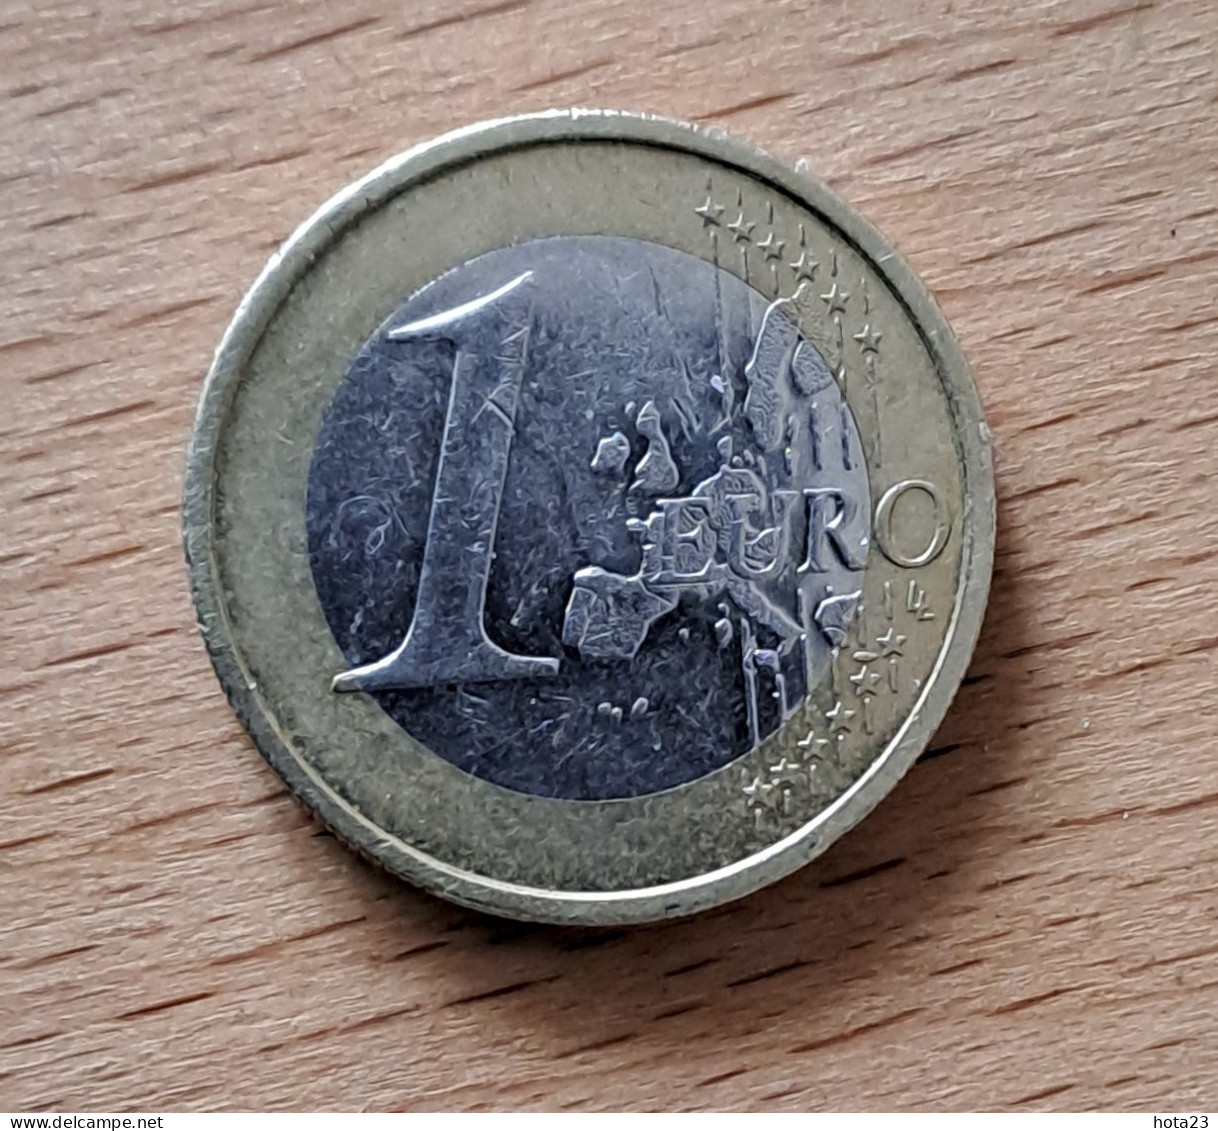 (!) 2004 - D -  Germany - 1  Euro  EIRO CIRCULEET COIN - Deutschland